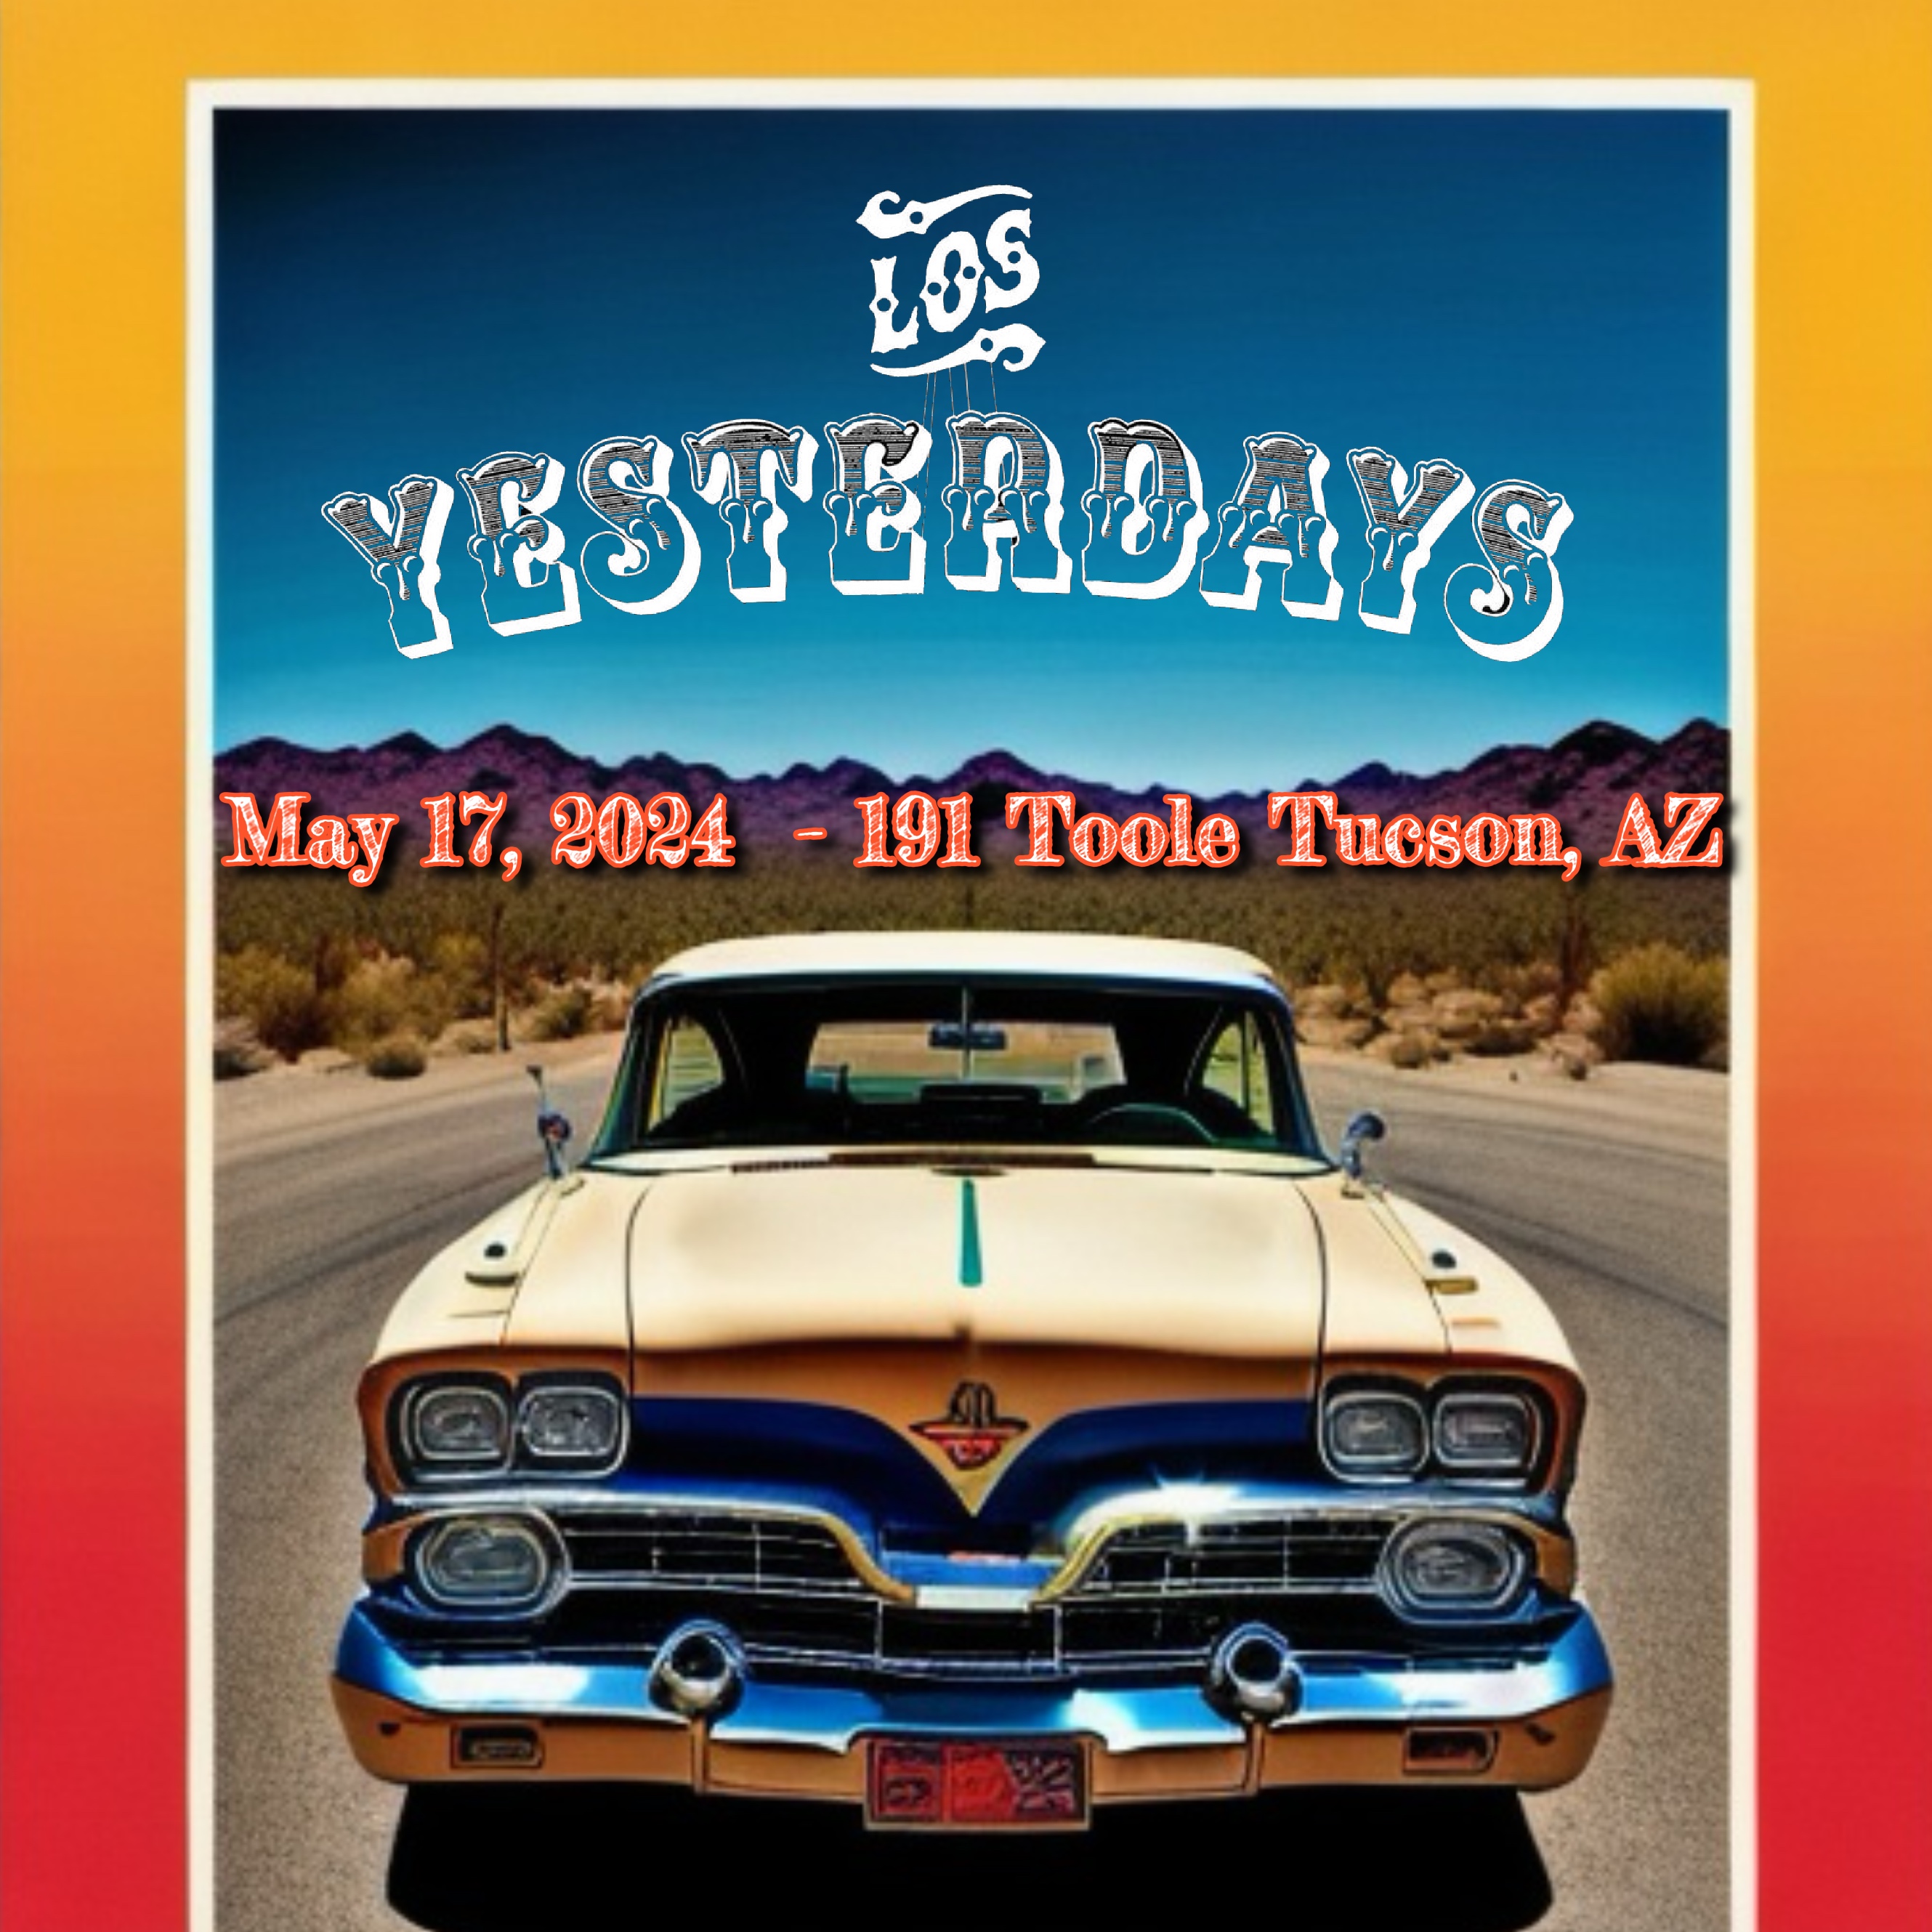 LOS YESTERDAYS191 Toole - Tucson